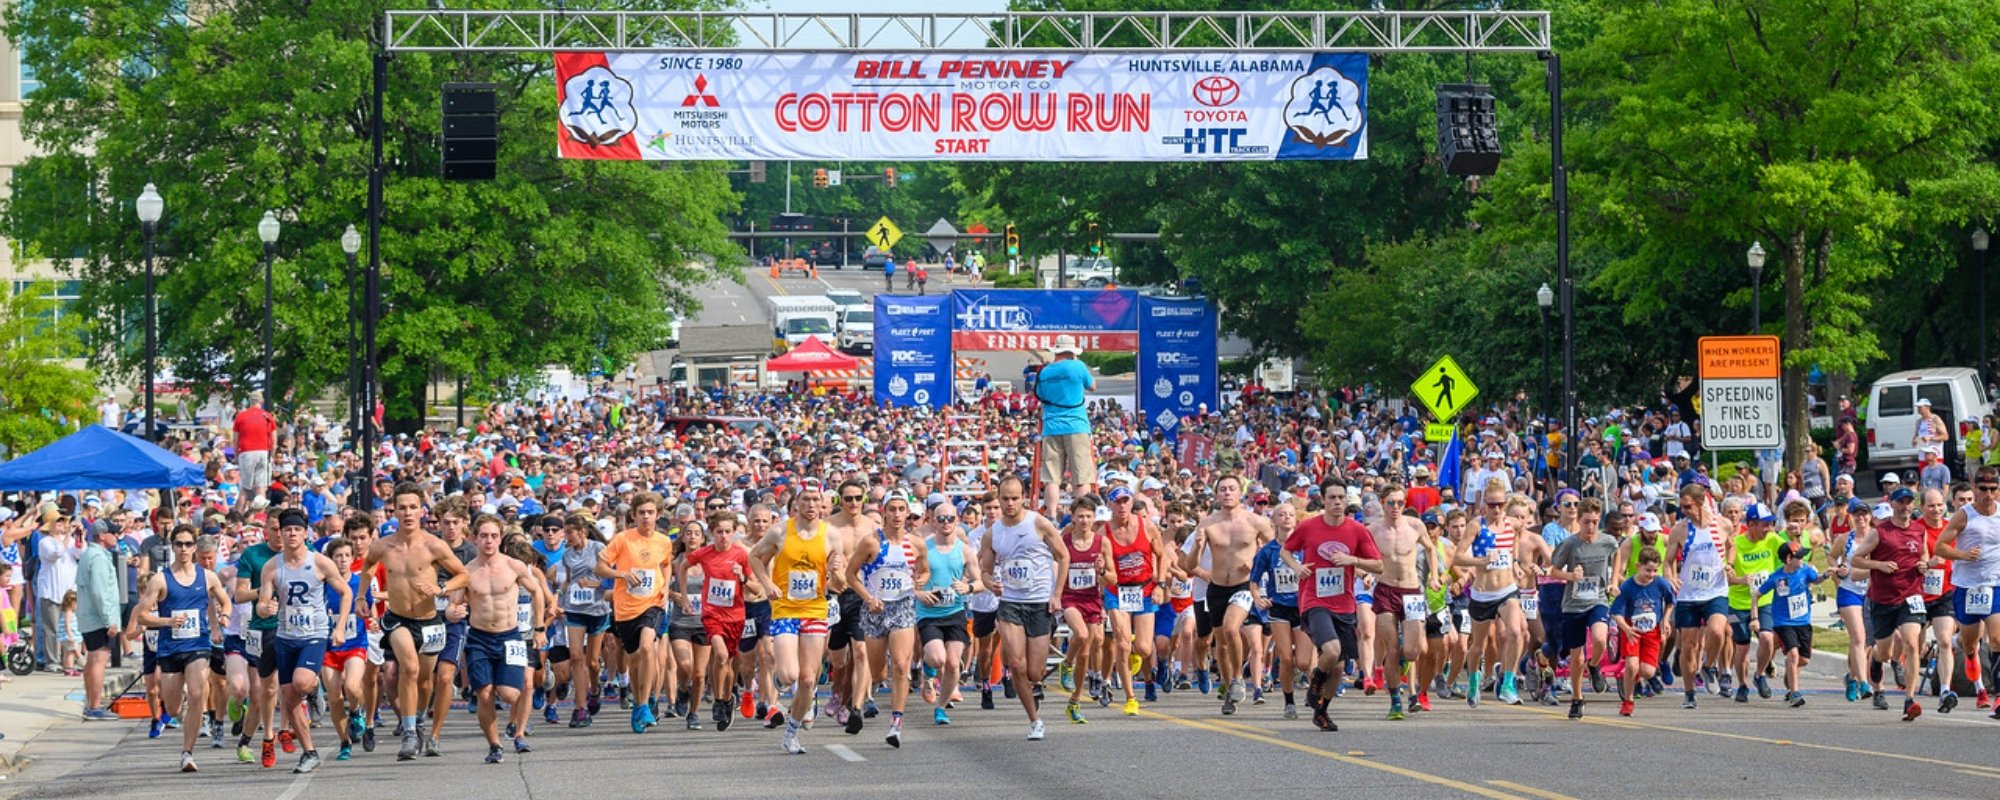 Cotton Row Run Returns As Memorial Day Staple The Madison Record